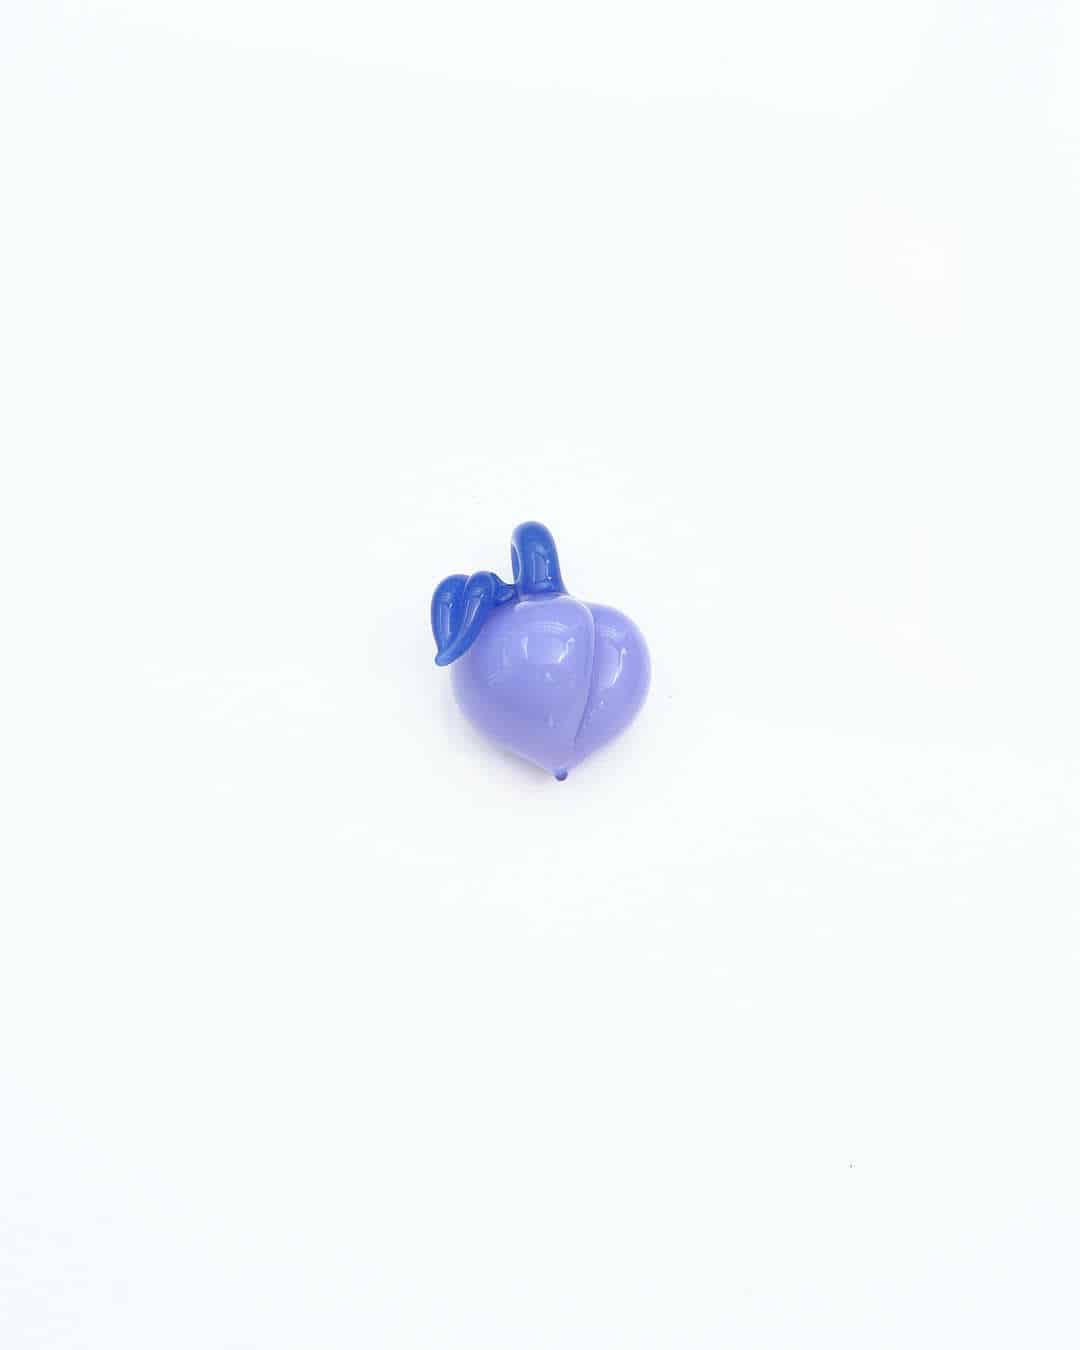 artisan-crafted glass pendant - (30C) Lavender Peach w/ Blue Stem Pendant by Gnarla Carla